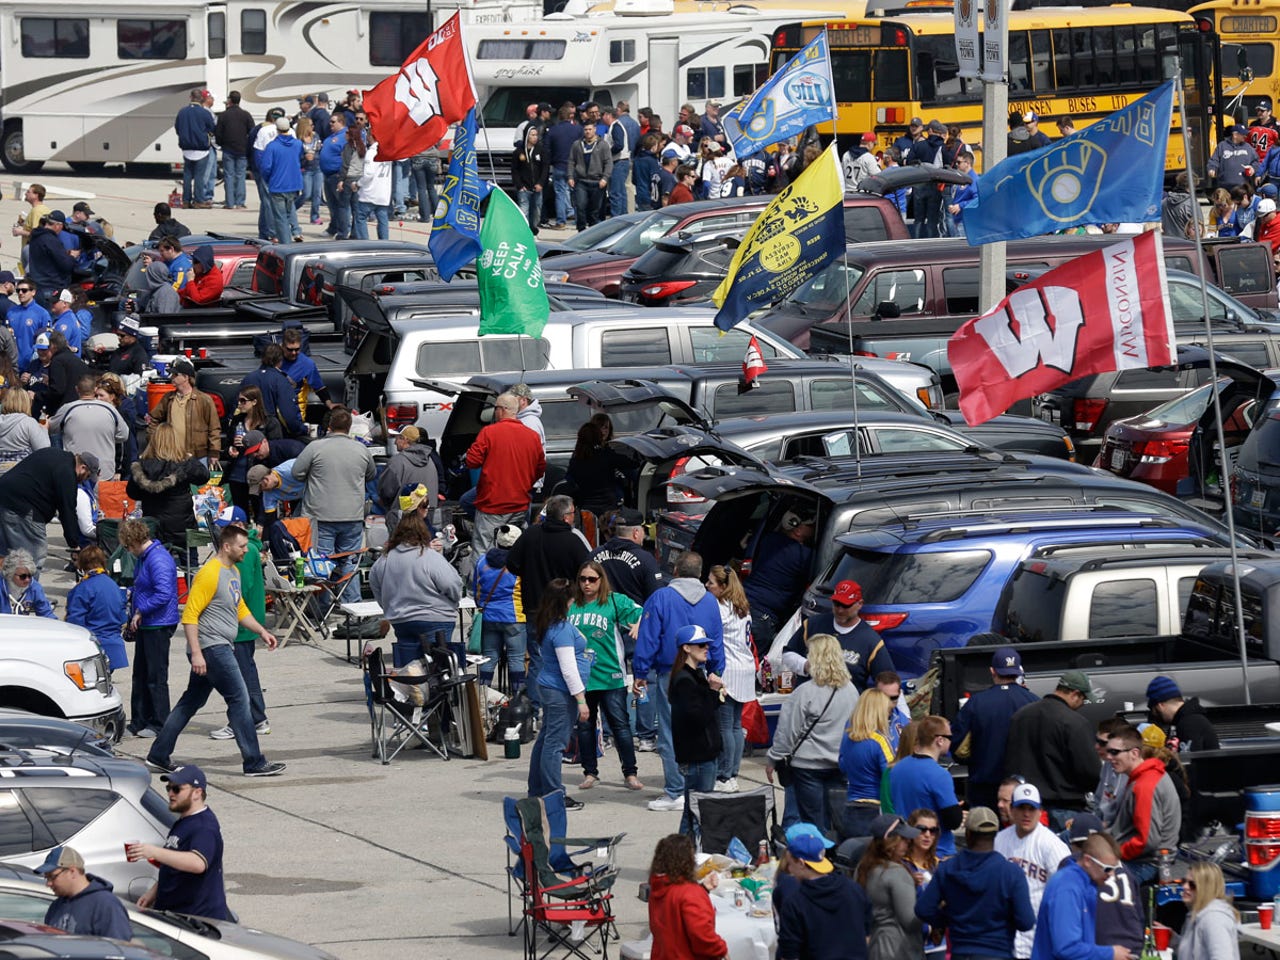 Raiders fold on stadium parking goals, tailgate culture in Las Vegas